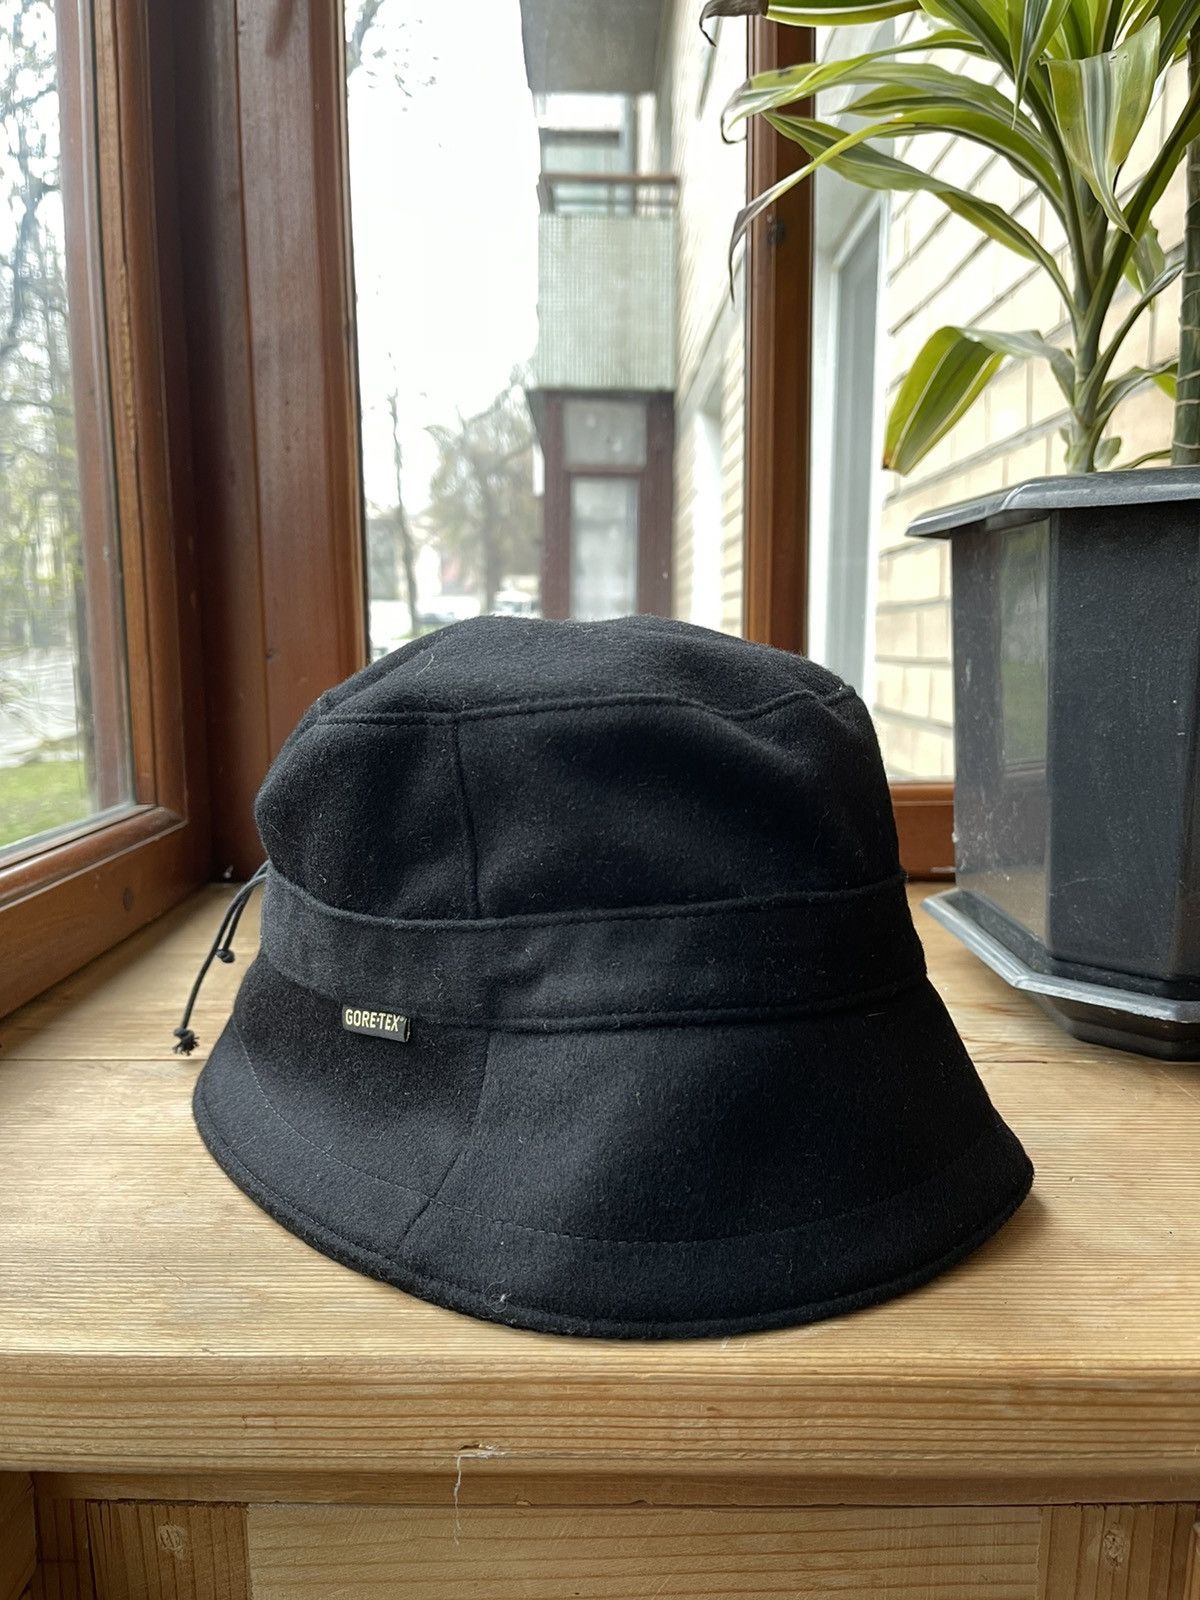 Rare Seeberger x Goretex Bucket Hat rare panama | Grailed